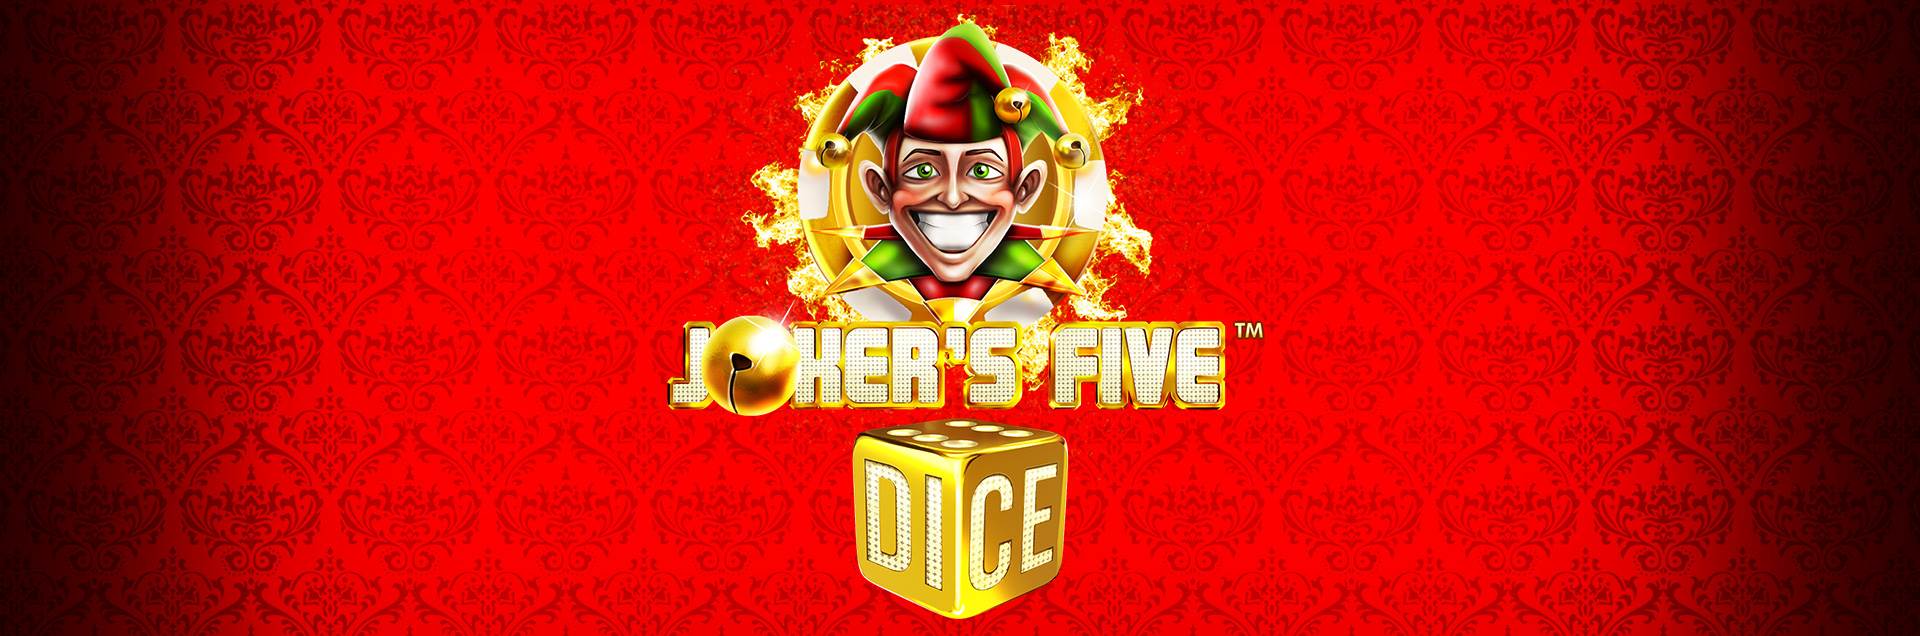 Jokers Five Dice header games Recovered